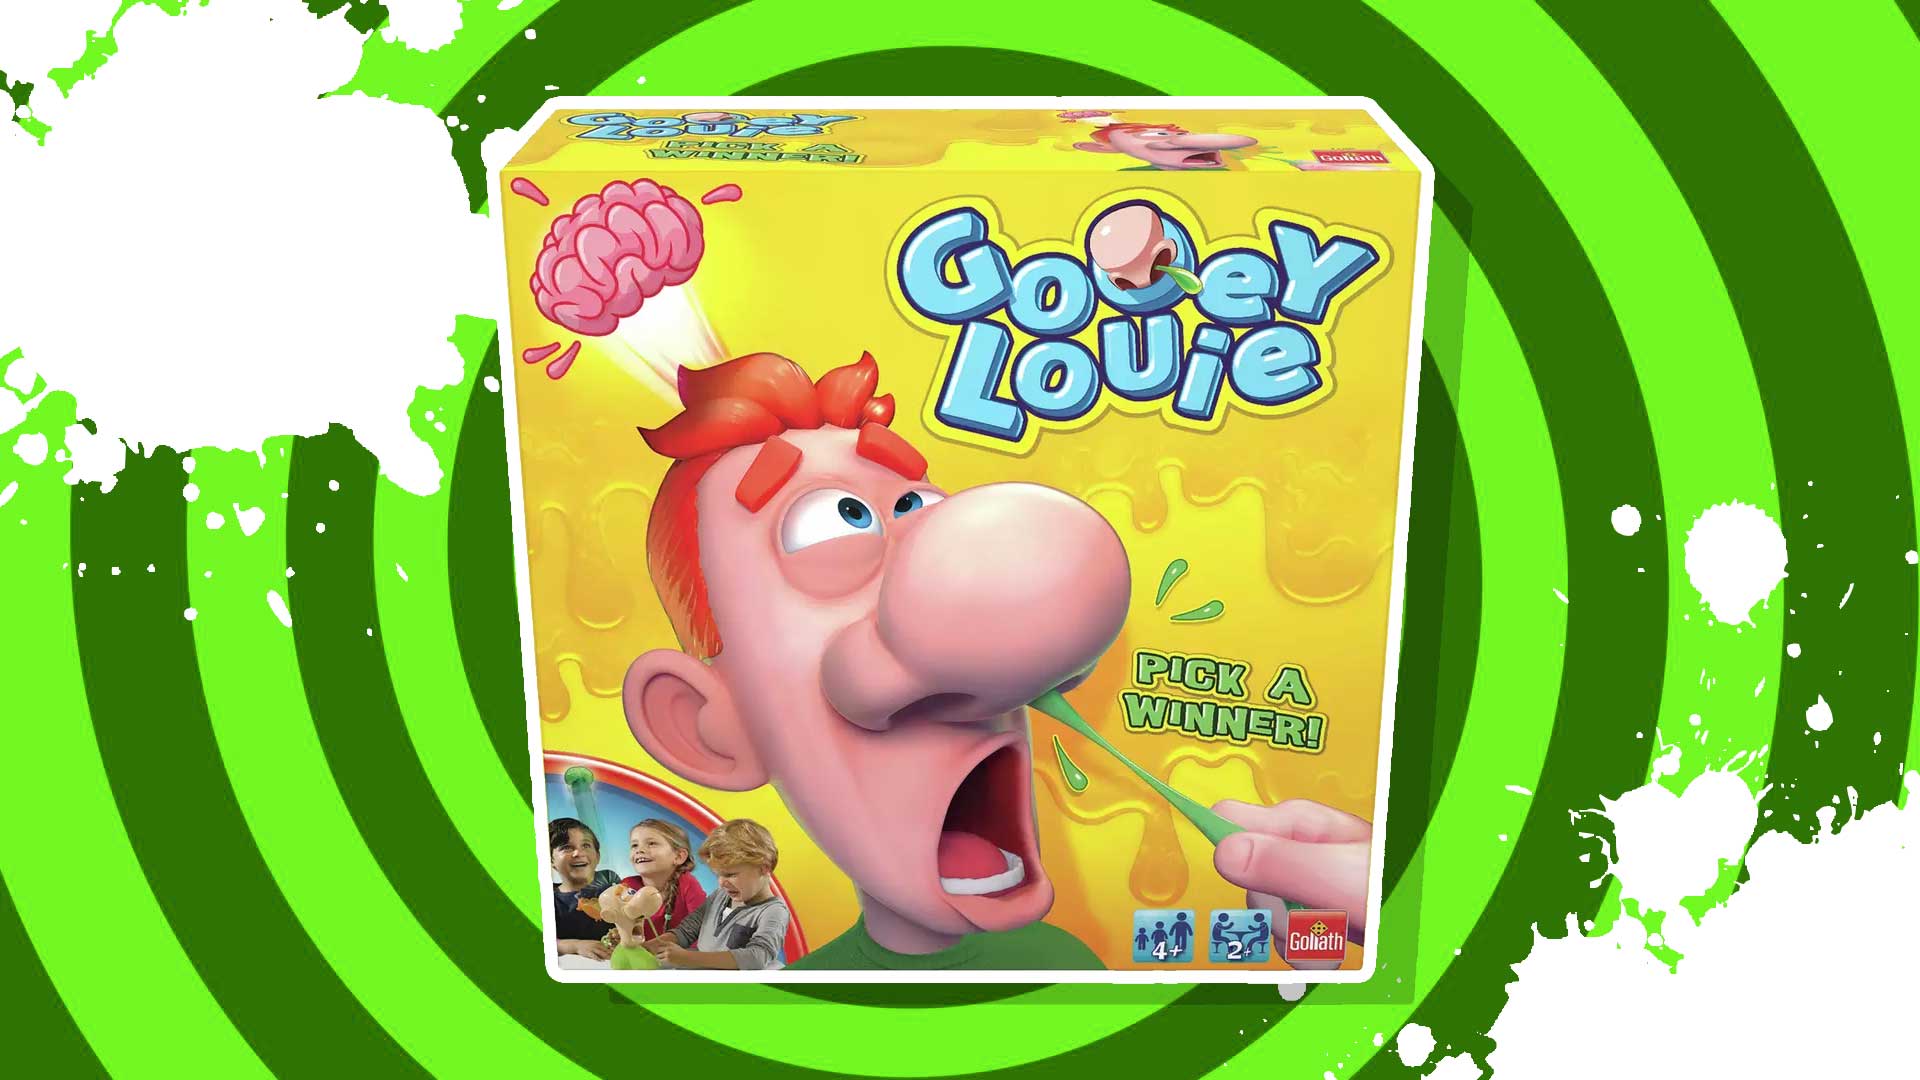 Gooey Louie game